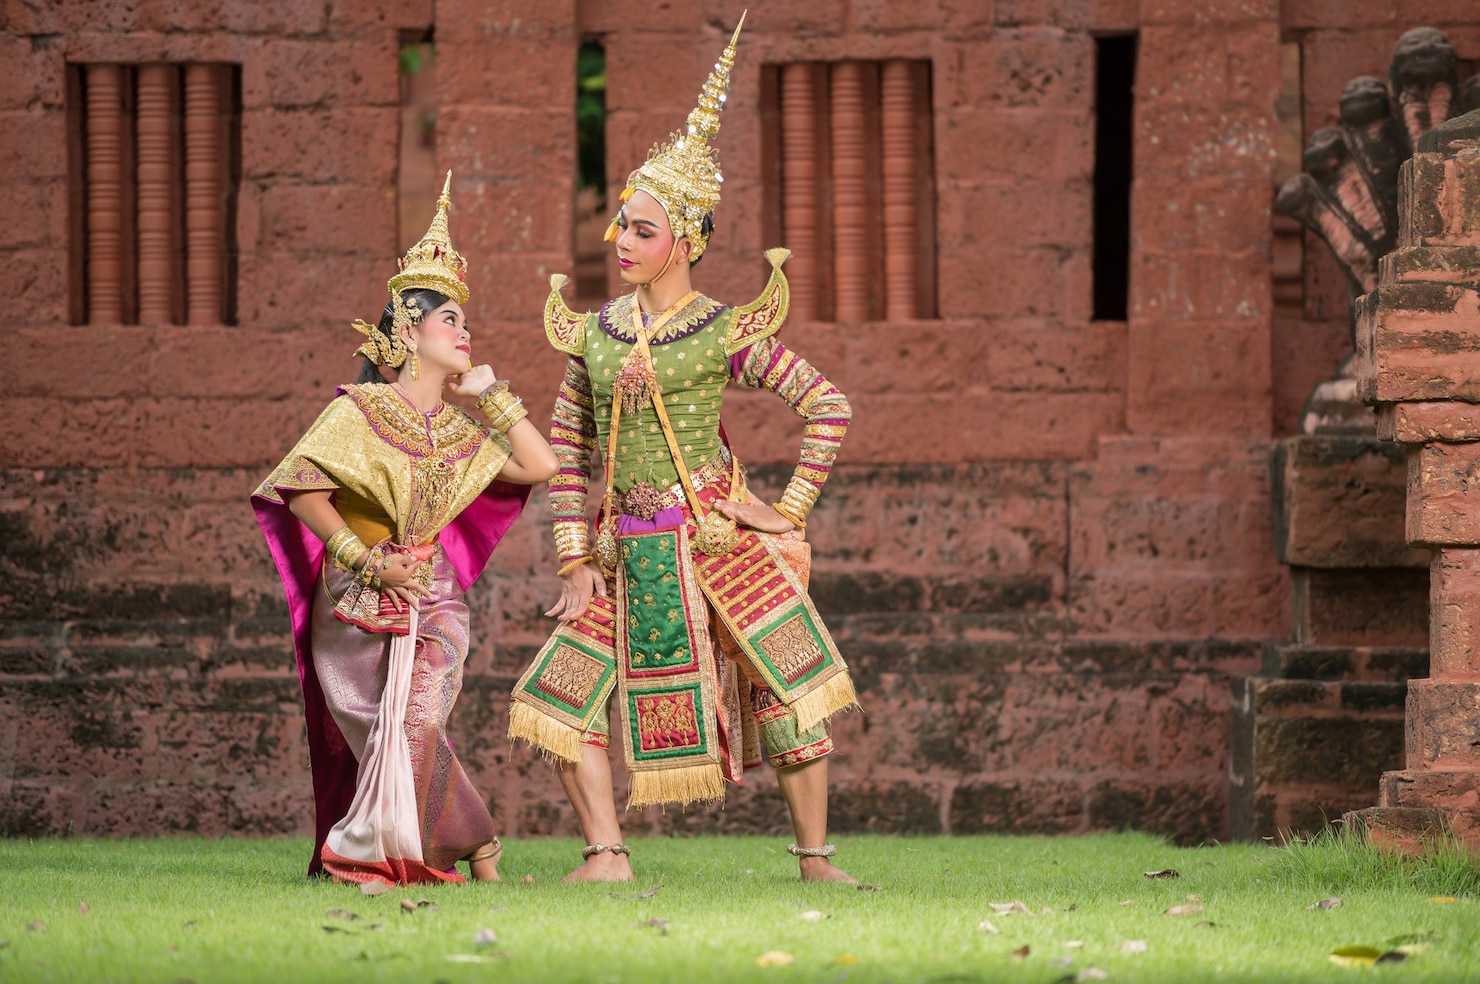 thailand-dancing-couple-masked-khon-performances-with-ancient-temple_1150-51645